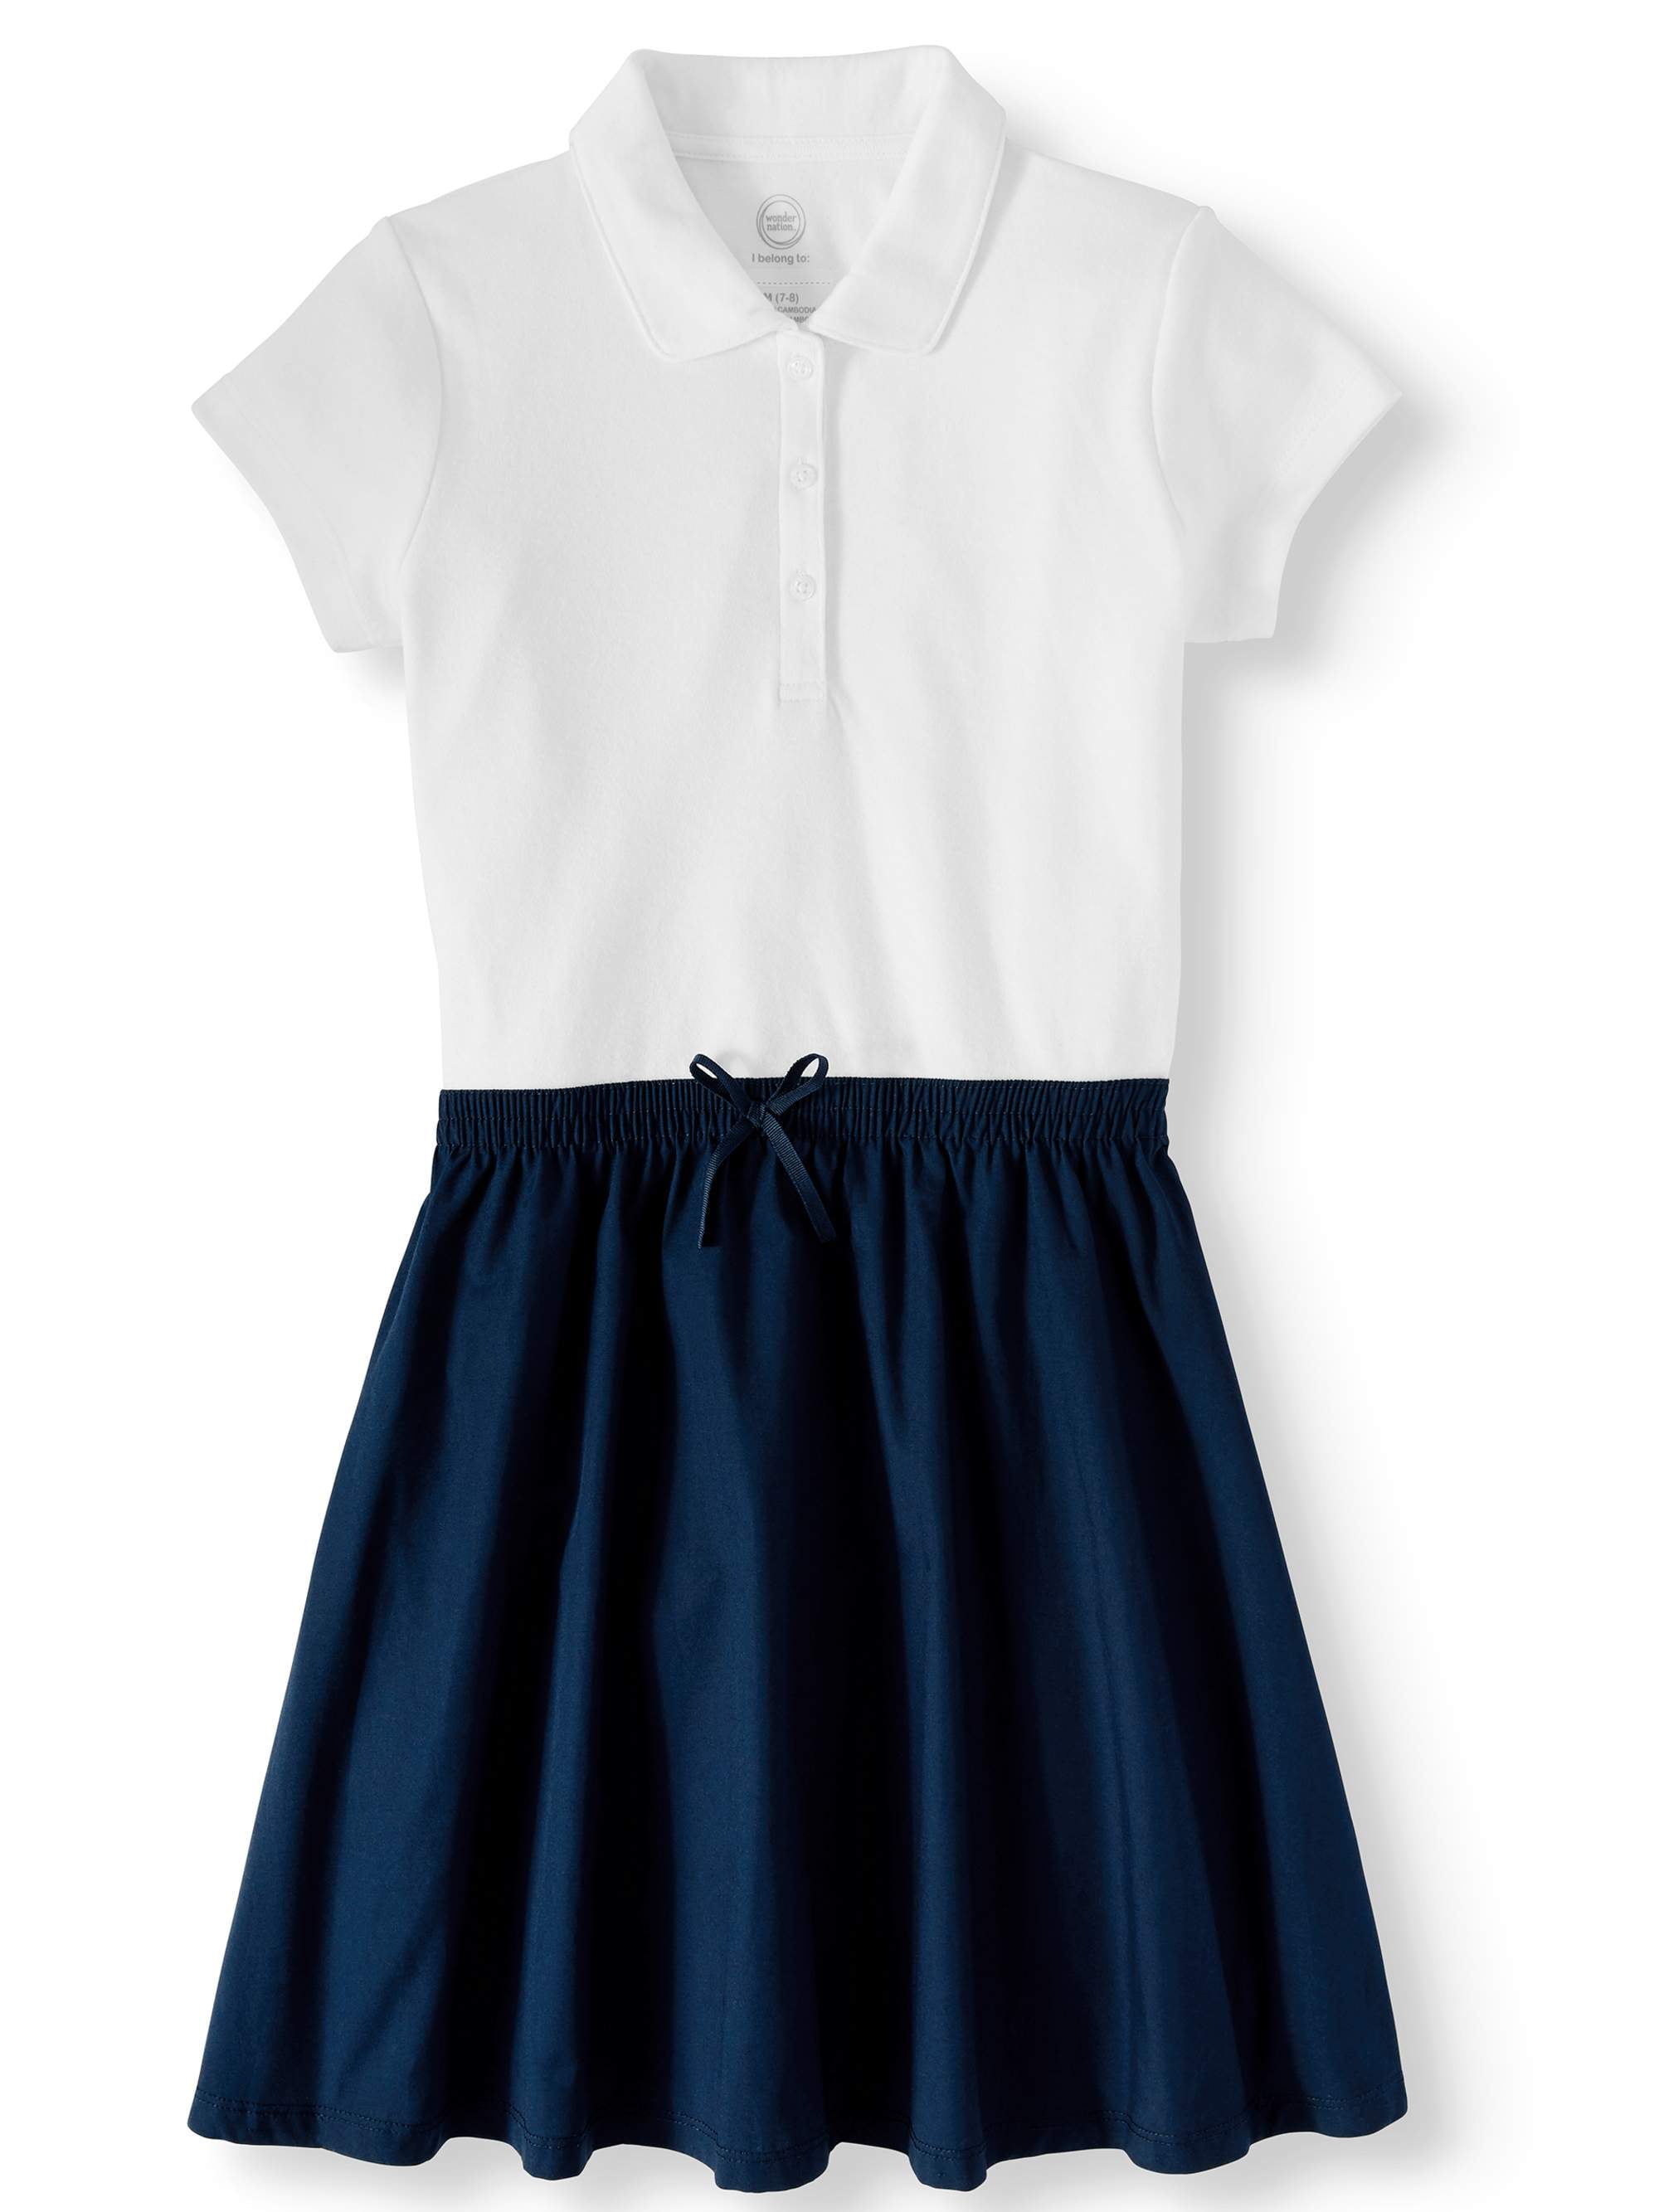 Girls juniors skirt Uniform Khaki Navy Blue 7 8 10 12 14 16 18 20 1/2 school NEW 